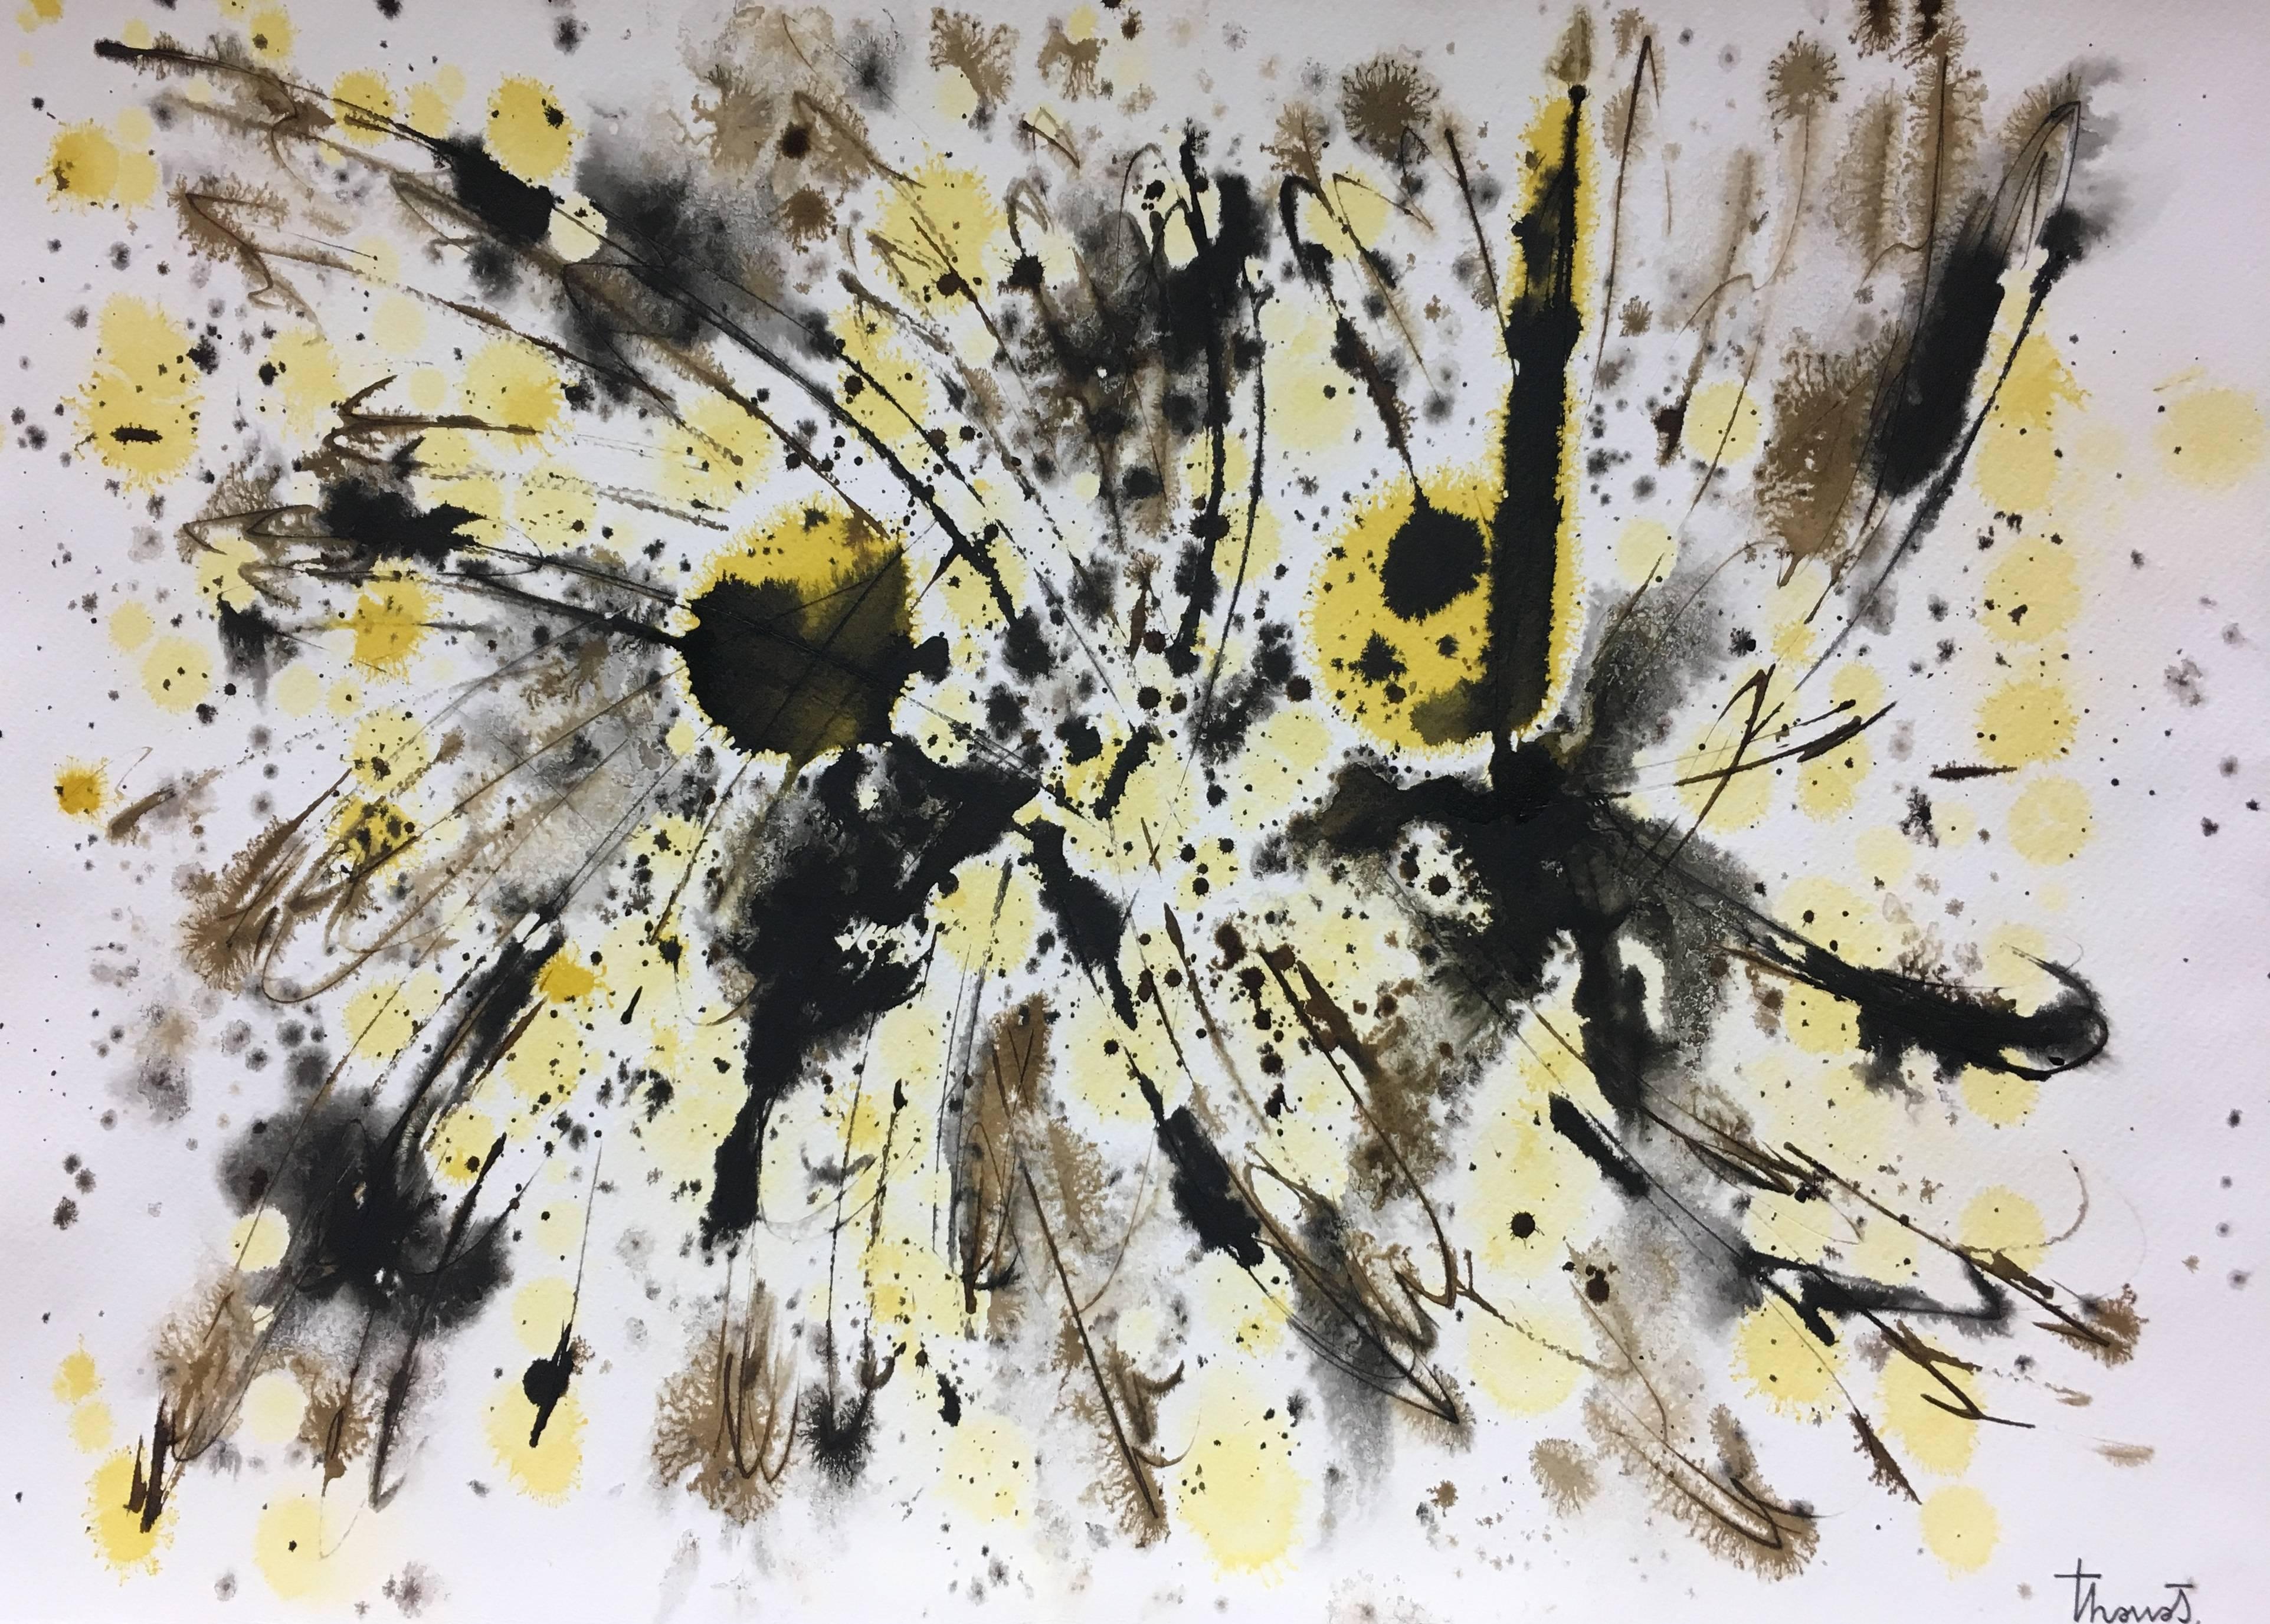  Tharrats.  Abstract White  Black  Yellow   original abstract acrylic  - Painting by Josep THARRATS